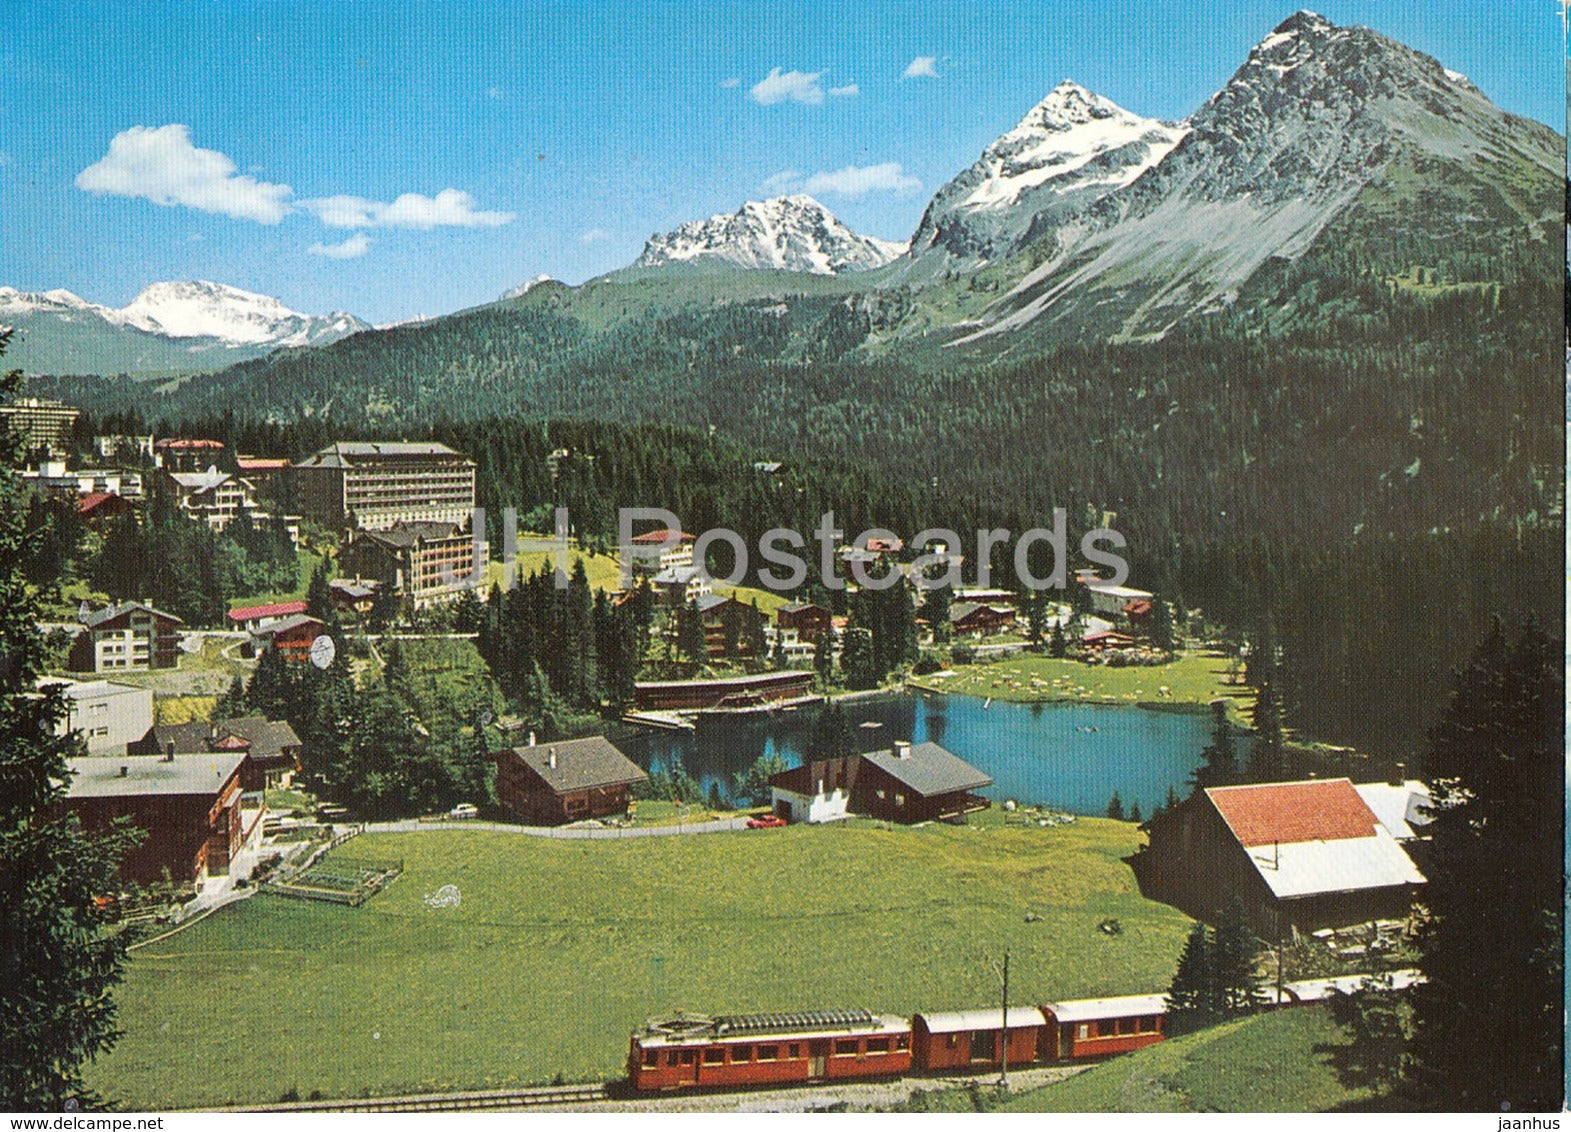 Arosa - Untersee mit Chur - Arosa Bahn - train - railway - 224 - 1976 - Switzerland - used - JH Postcards